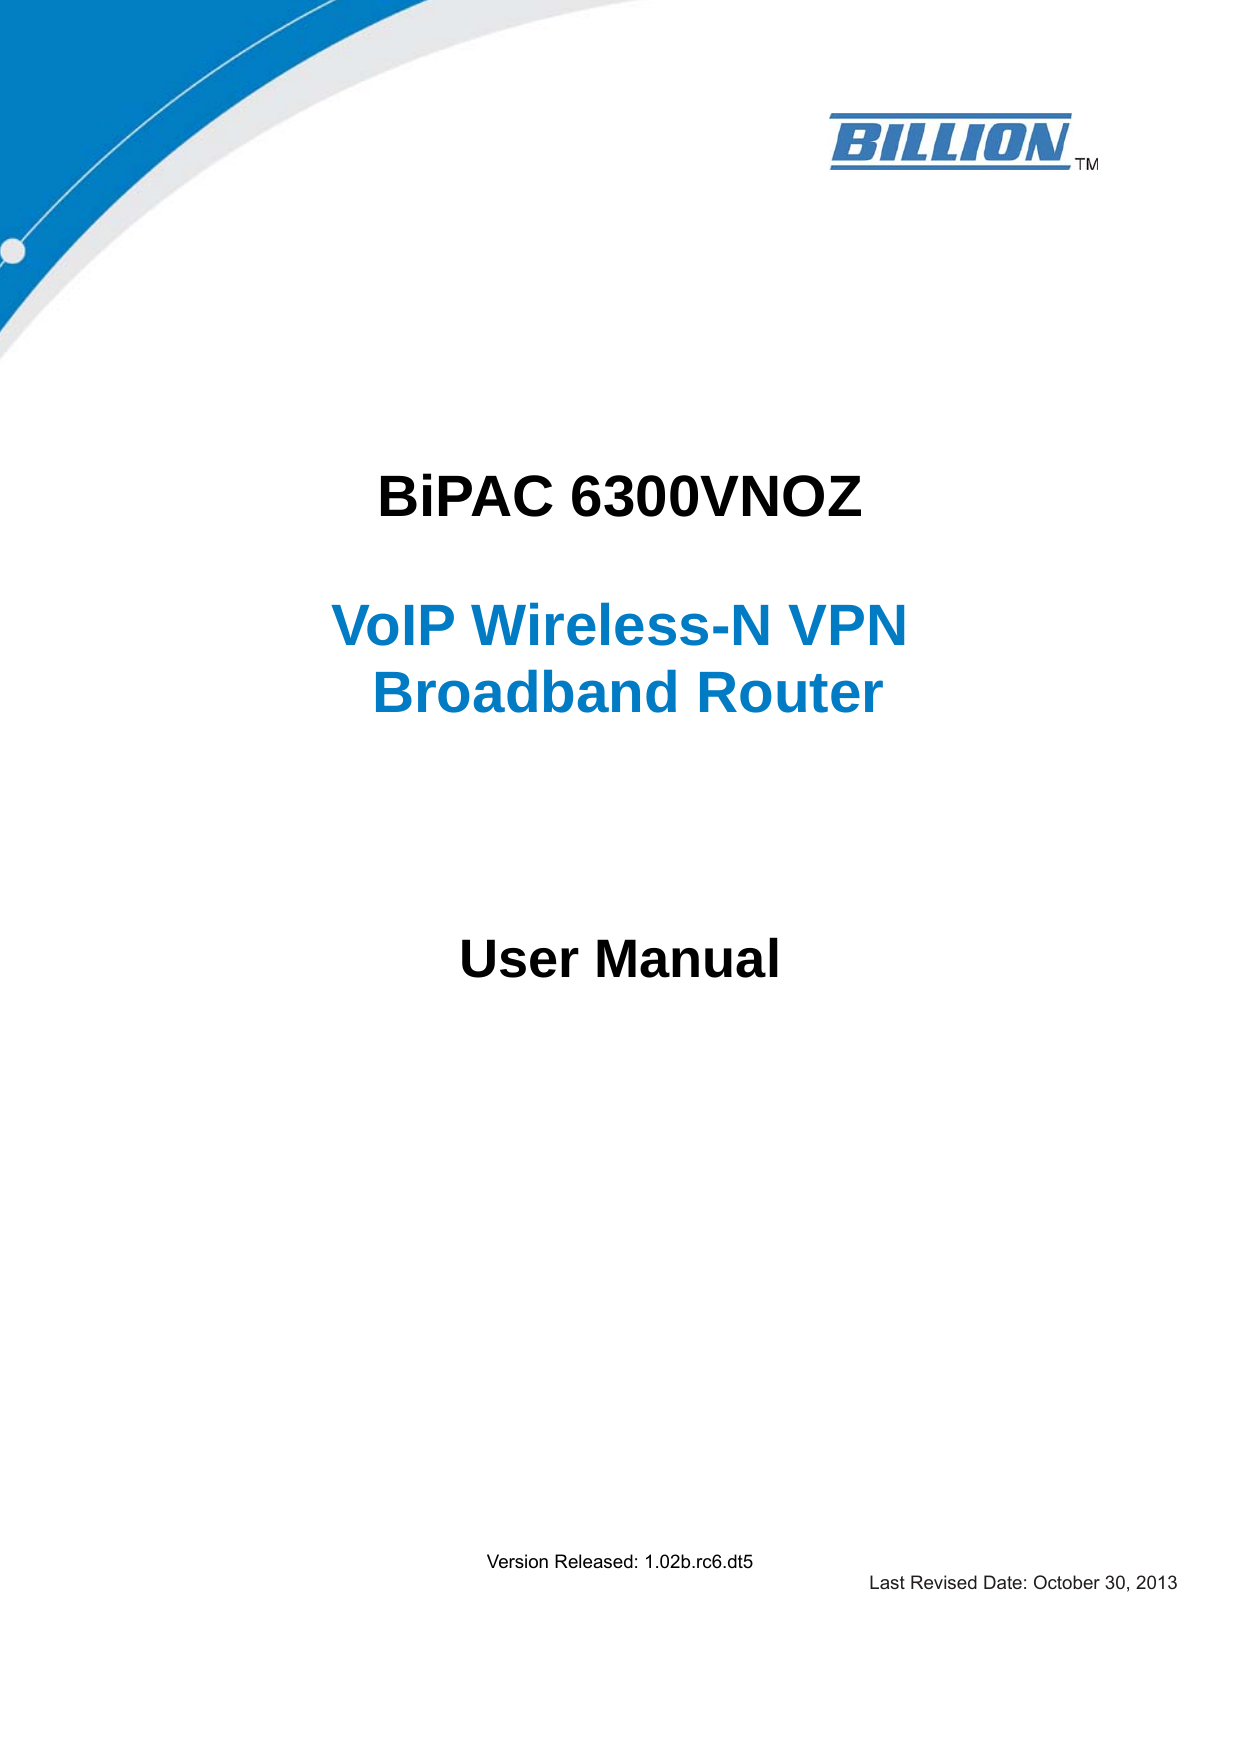     BiPAC 6300VNOZ  VoIP Wireless-N VPN  Broadband Router   User Manual                   Version Released: 1.02b.rc6.dt5 Last Revised Date: October 30, 2013 